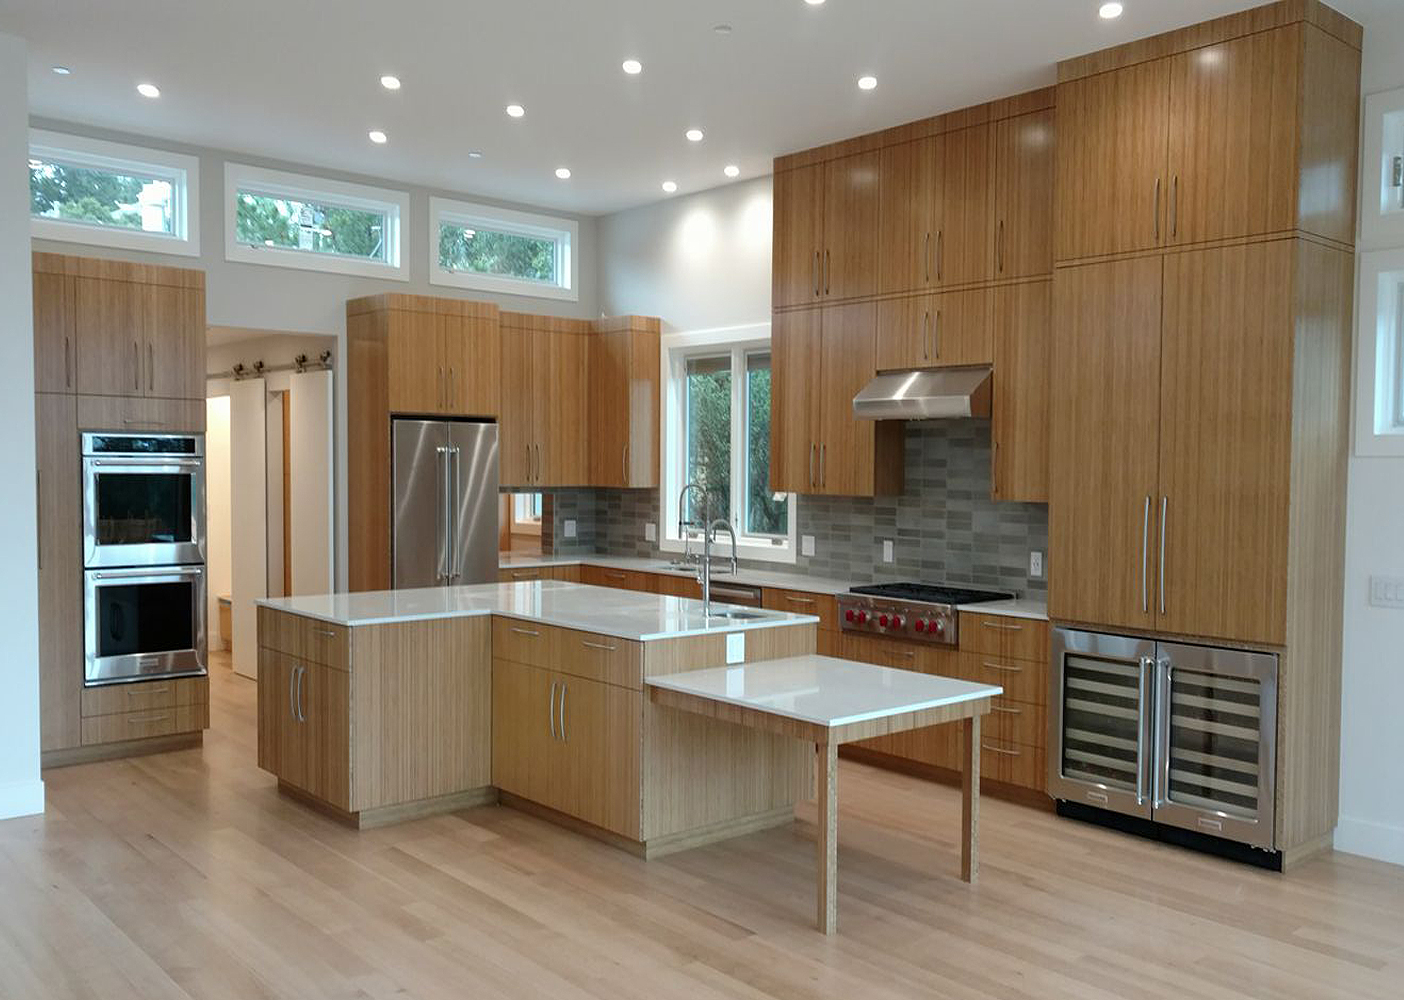 Handcrafted Cabinetry & Award Winning Custom Kitchen Design